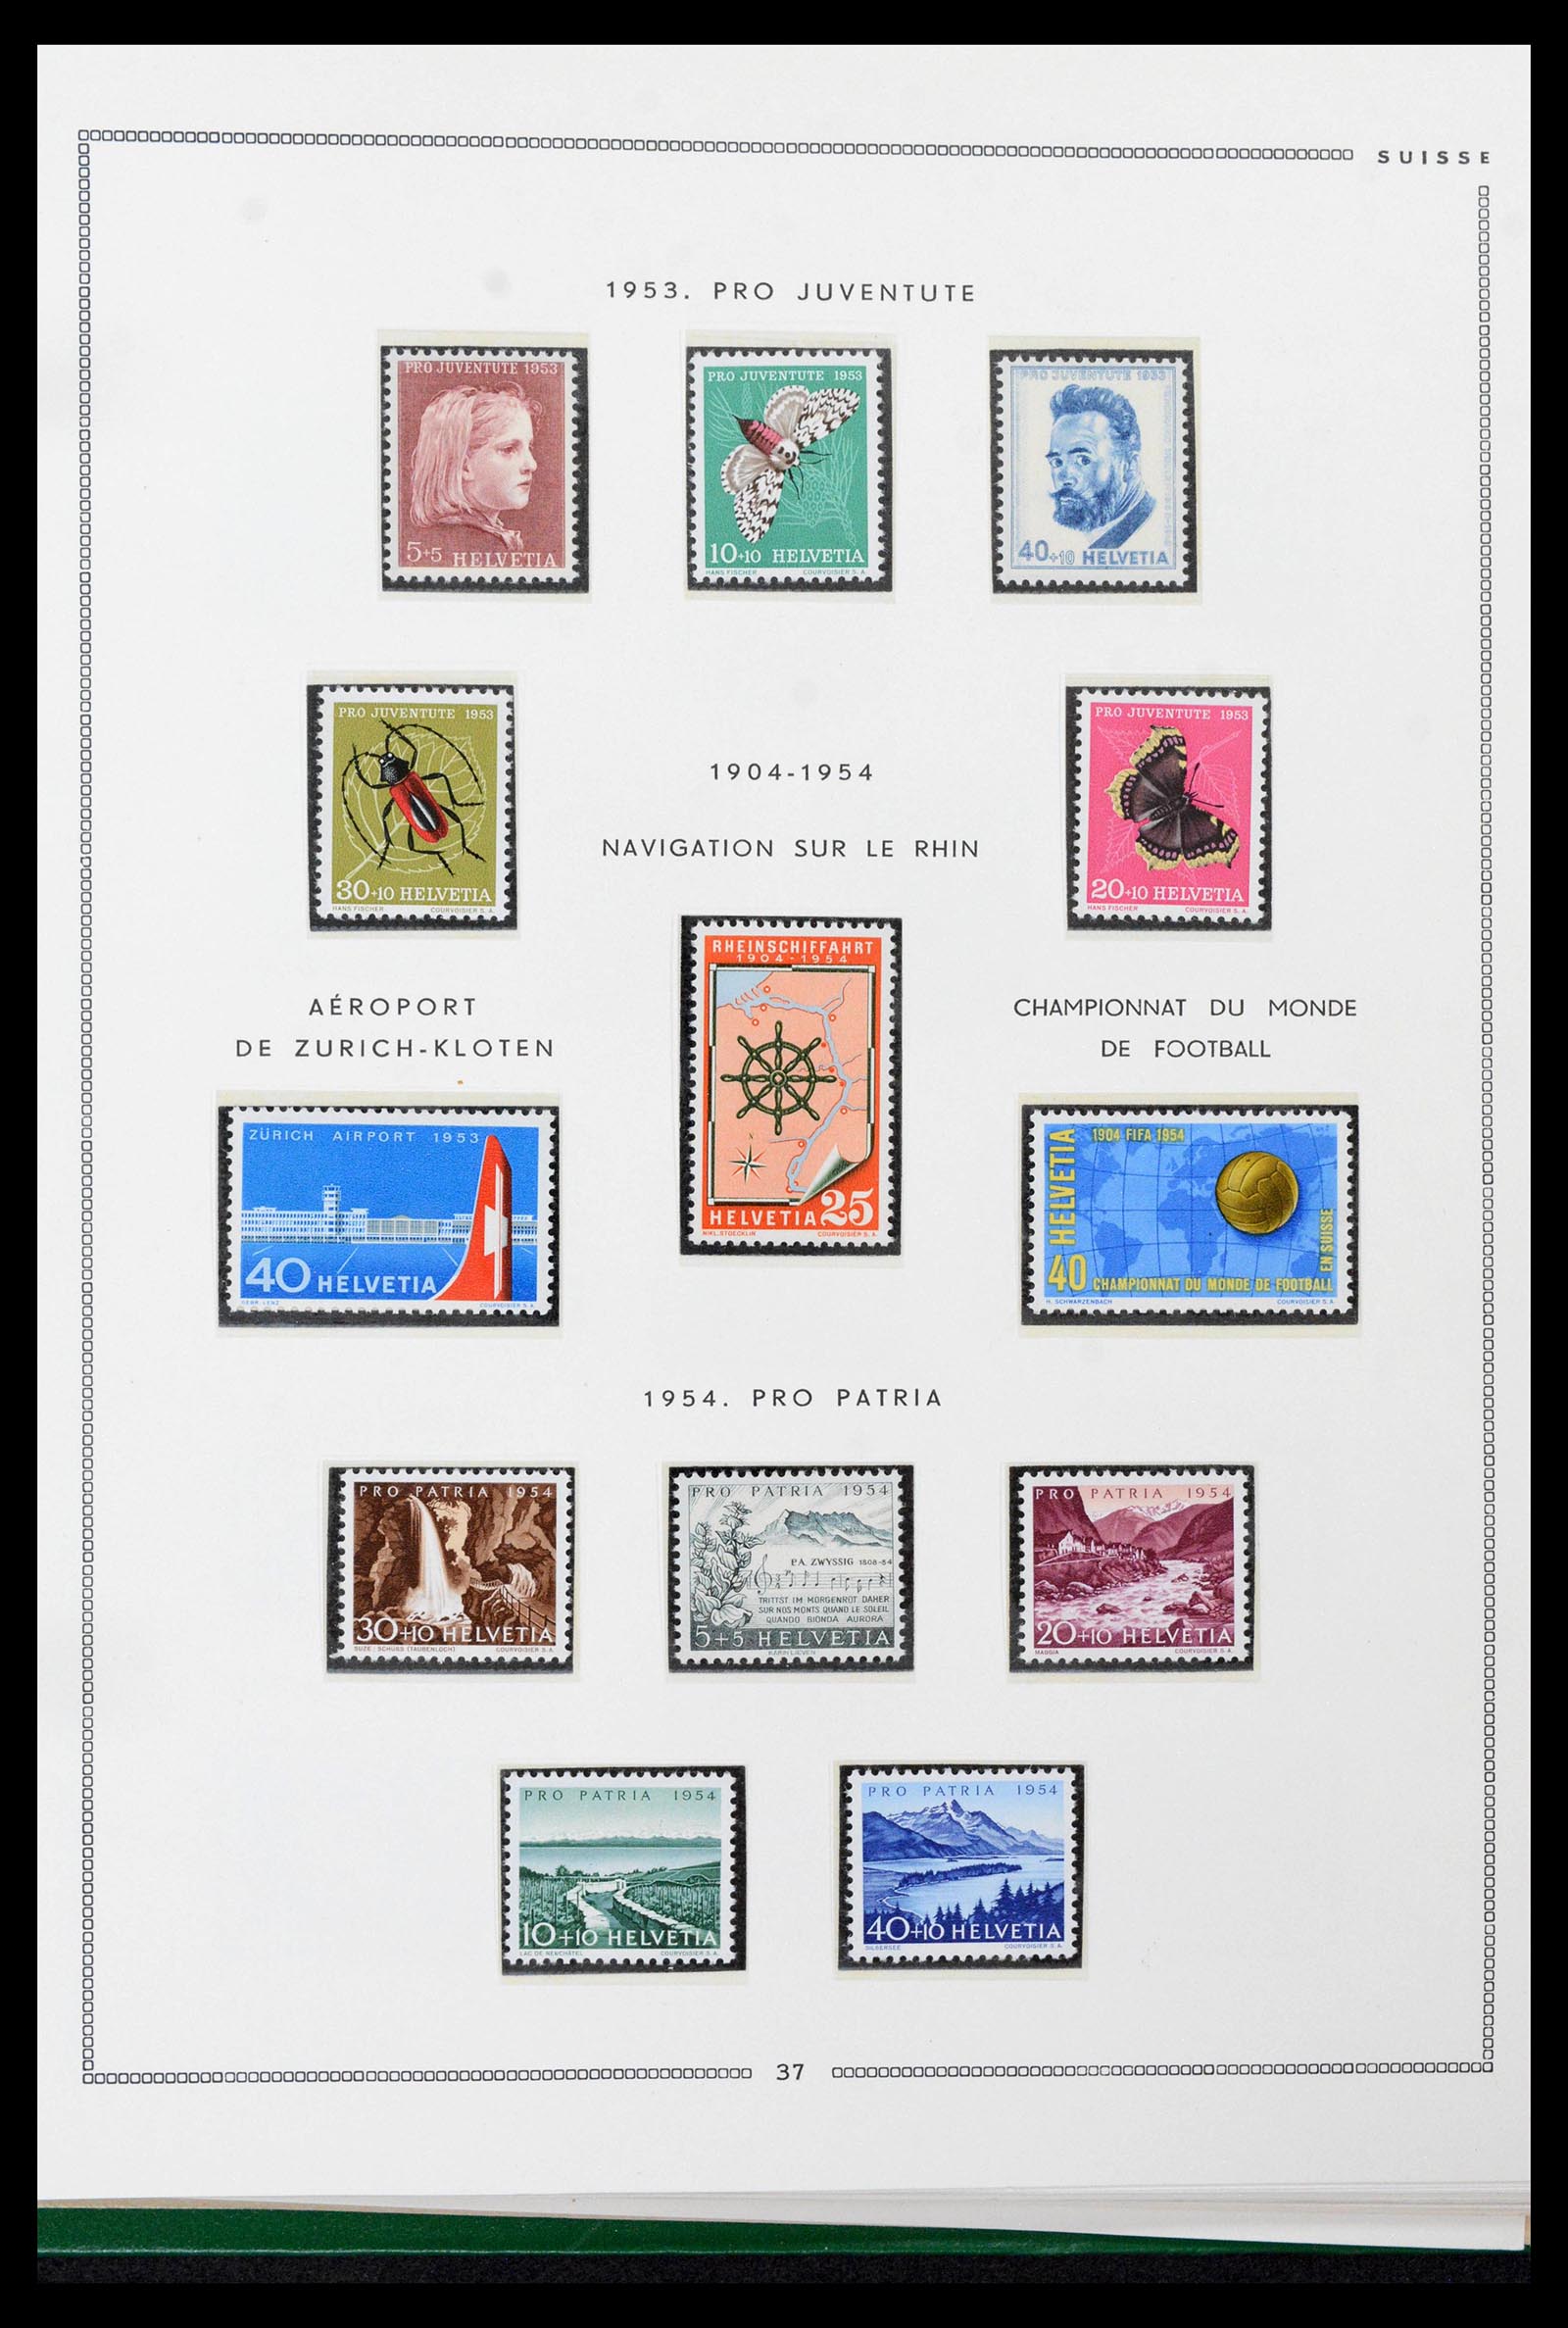 39096 0032 - Stamp collection 39096 Switzerland 1907-1963.